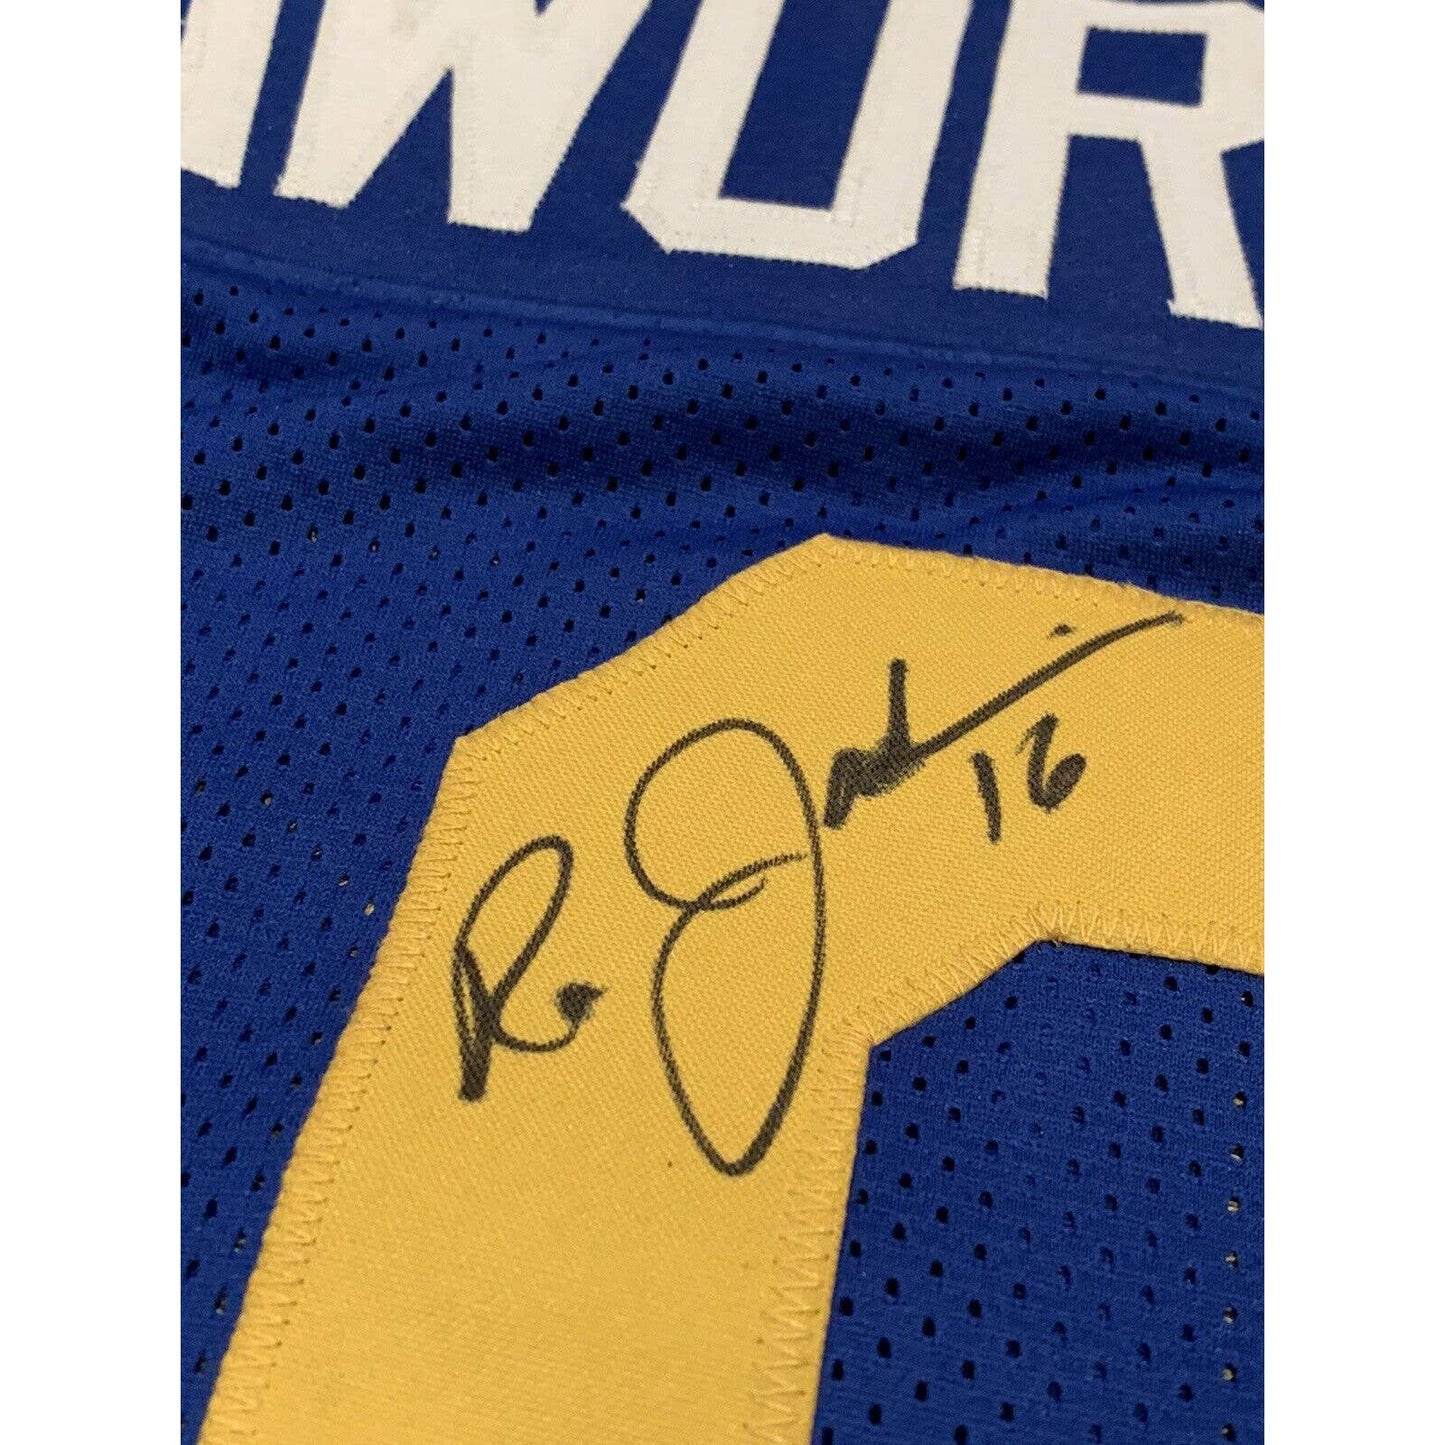 Ron Jaworski Autographed/Signed Jersey JSA COA Los Angeles Rams LA - TreasuresEvolved